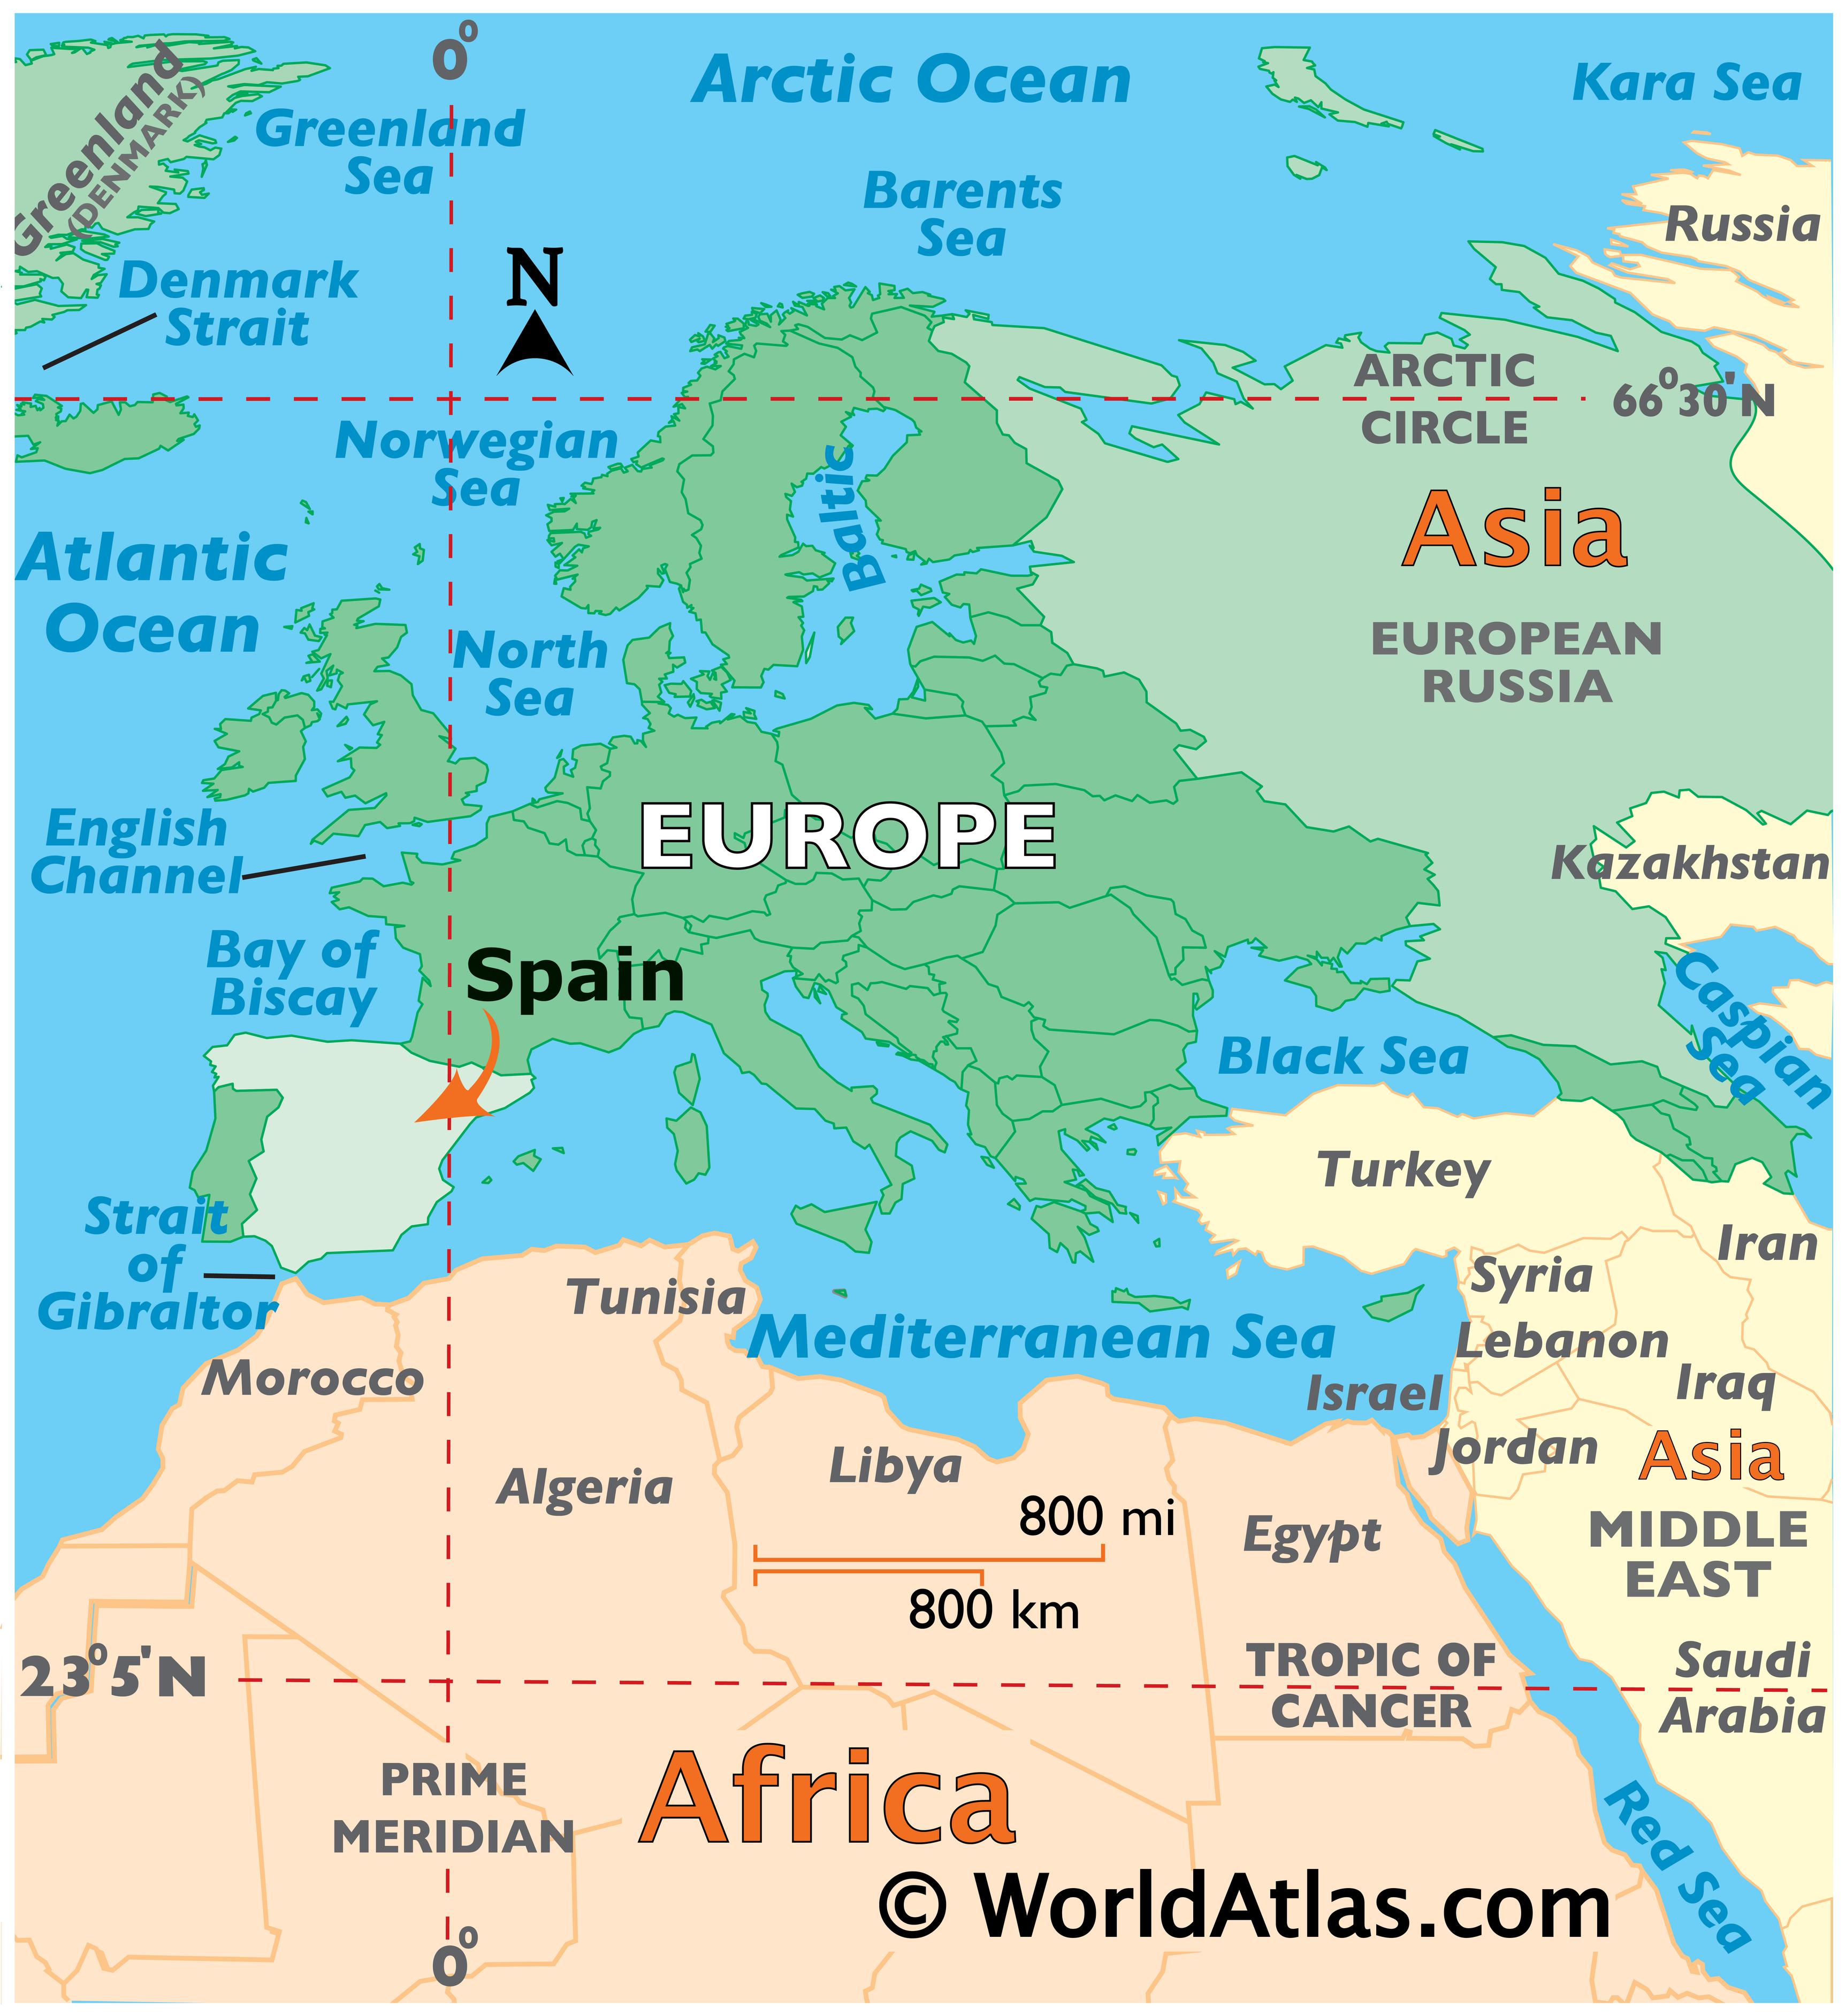 Spain Map Geography Of Spain Map Of Spain Worldatlas Com